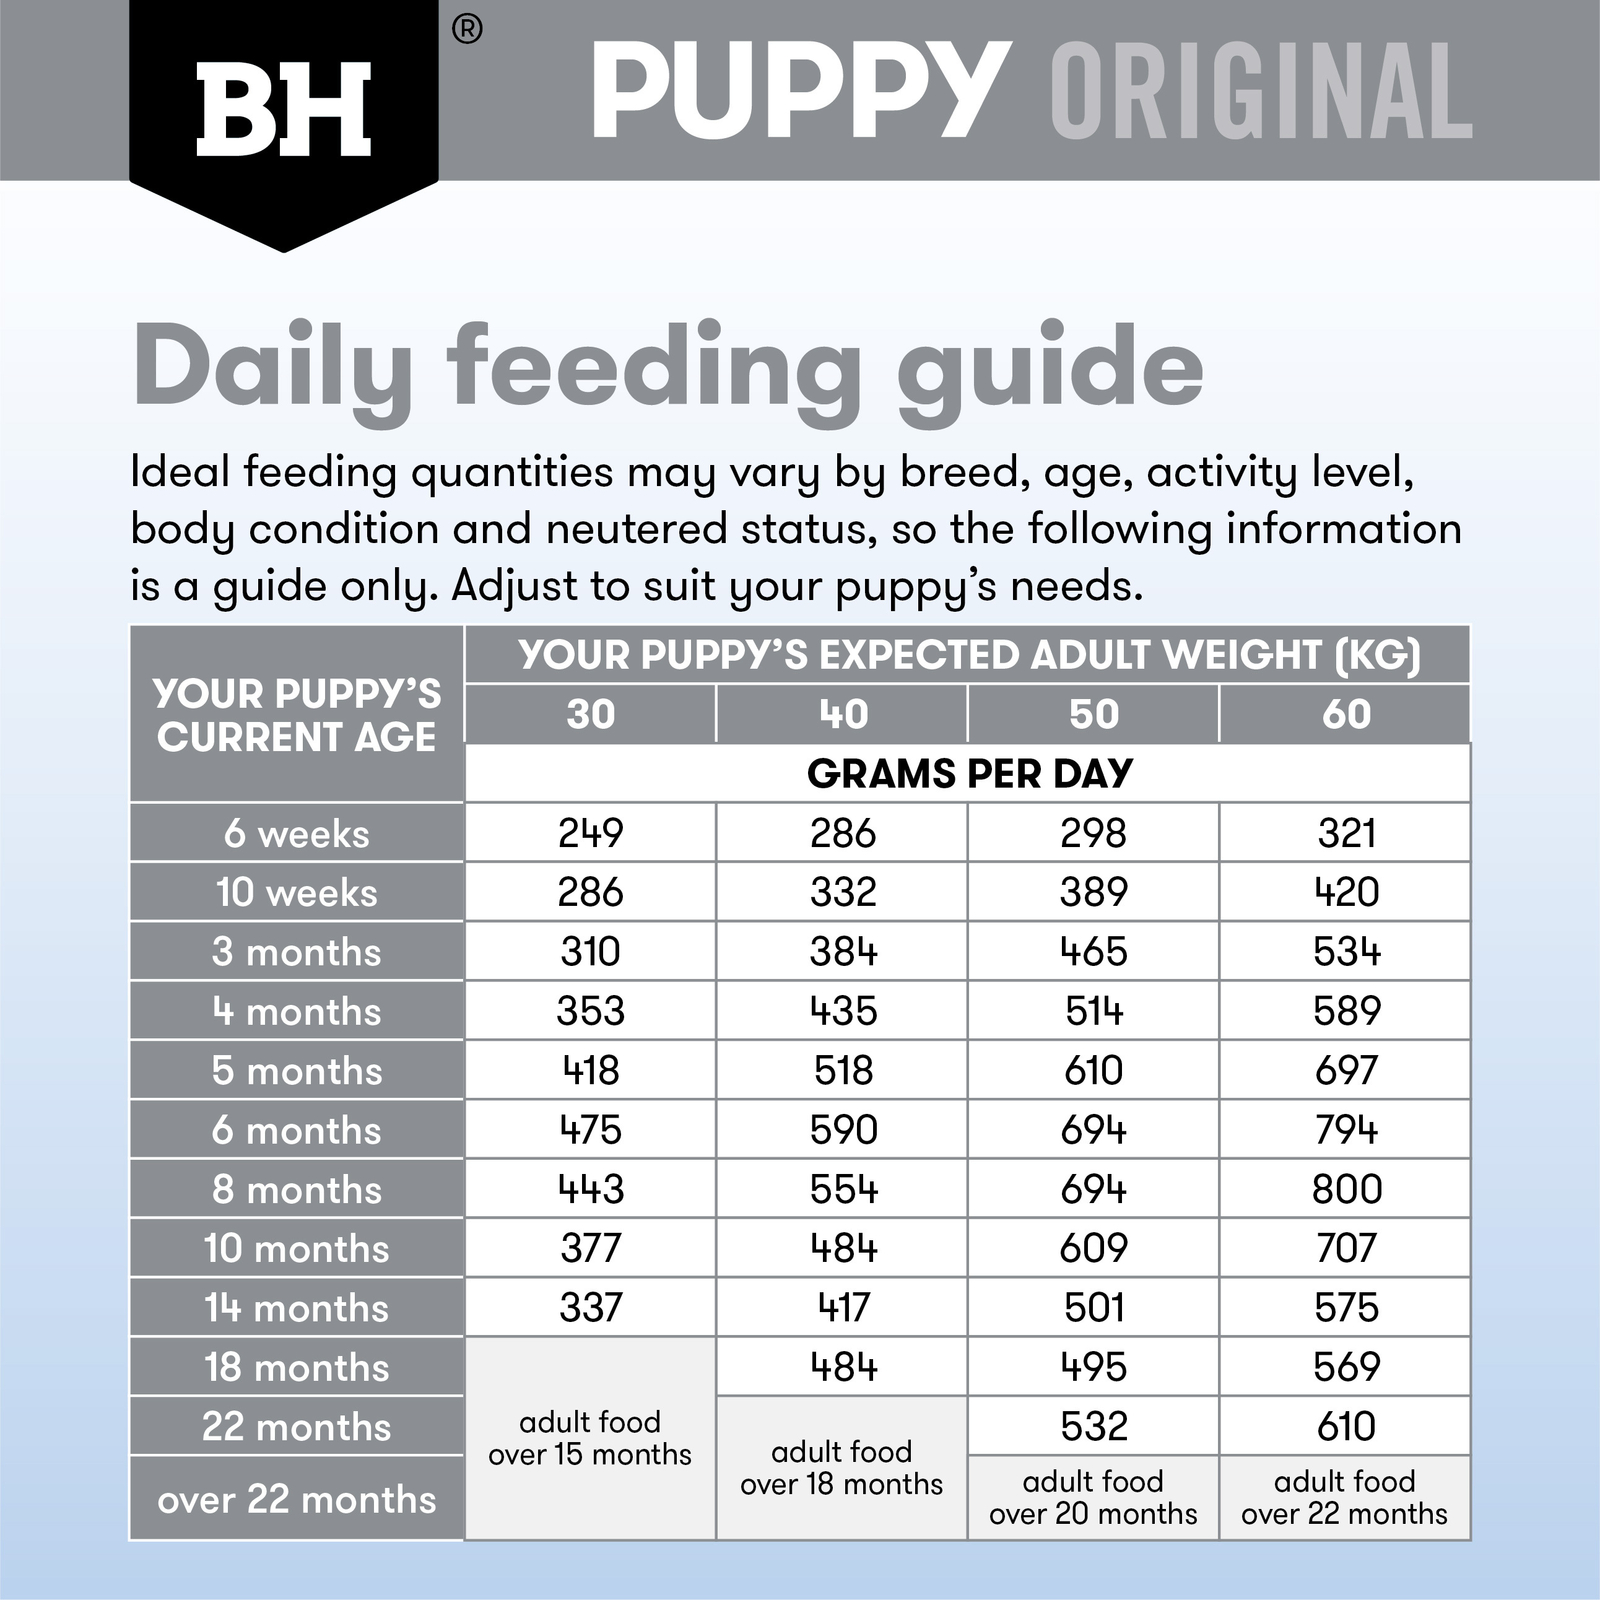 Black Hawk Dog Food Puppy Large Breed Lamb & Rice